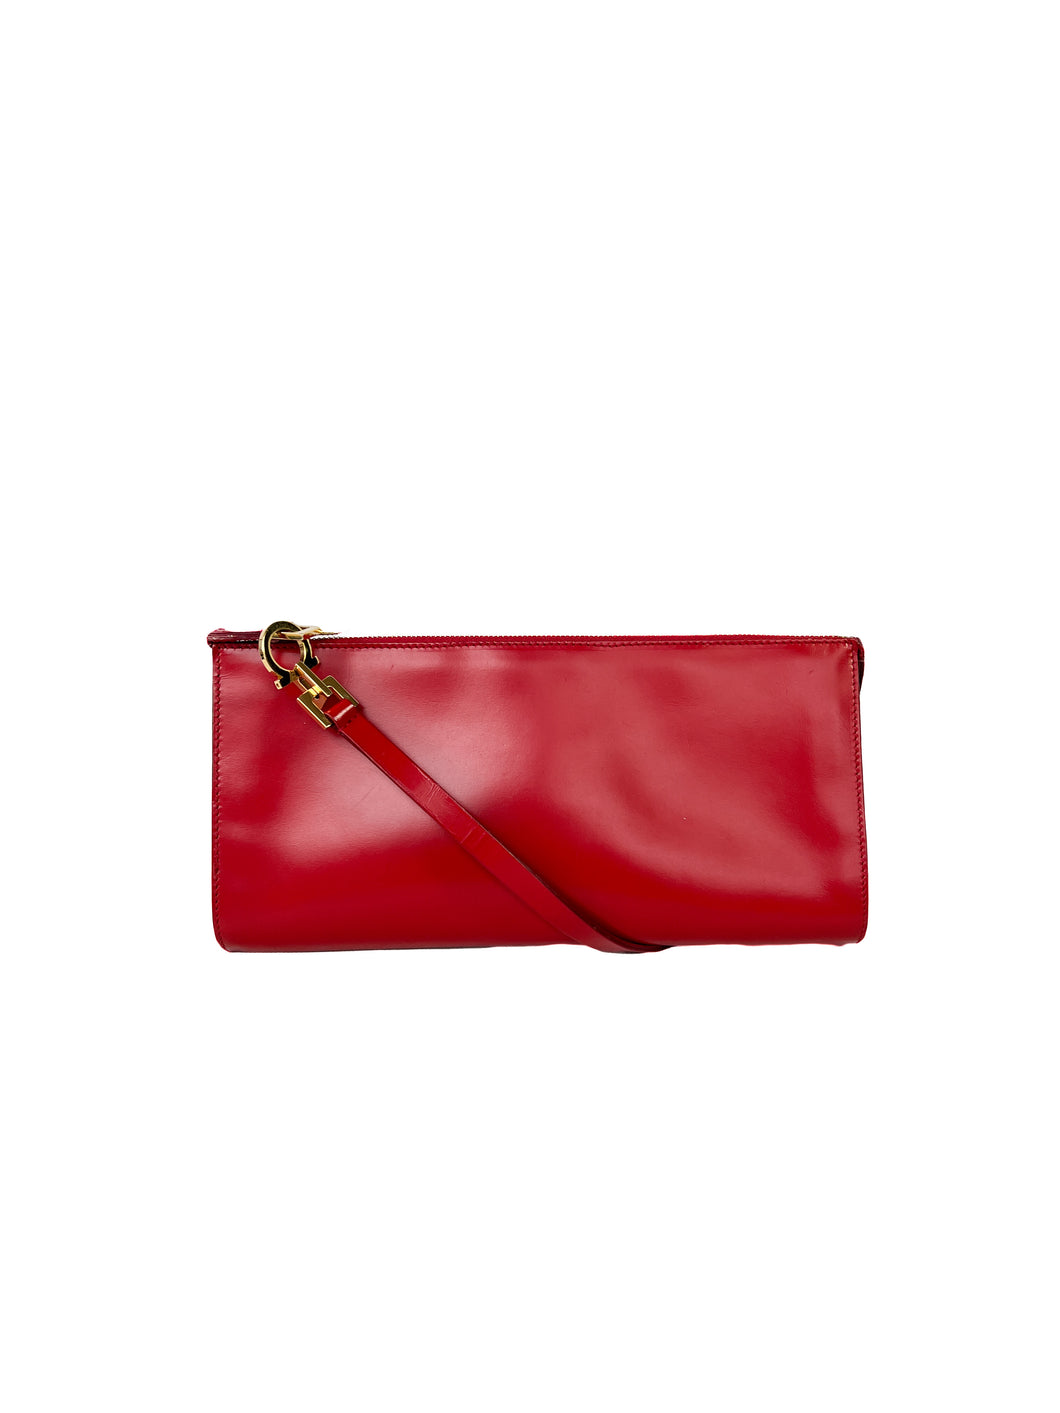 Salvatore Ferragamo red leather shoulder bag